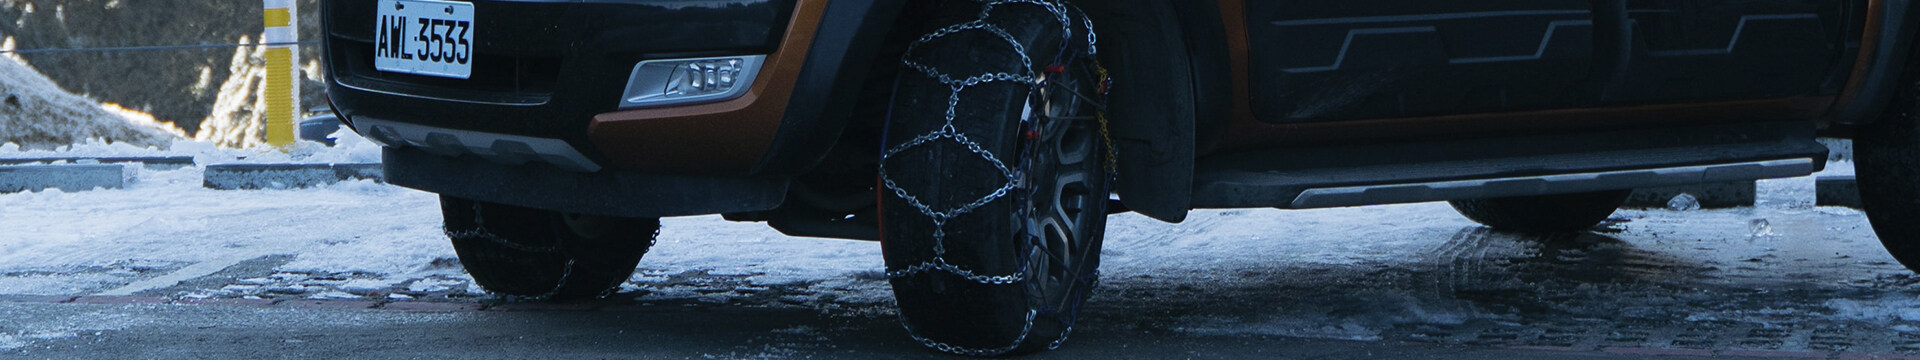 China Car Tire Anti-Skid Snow Chains Manufacturer， China Car Tire Anti-Skid Snow Chains Supplier